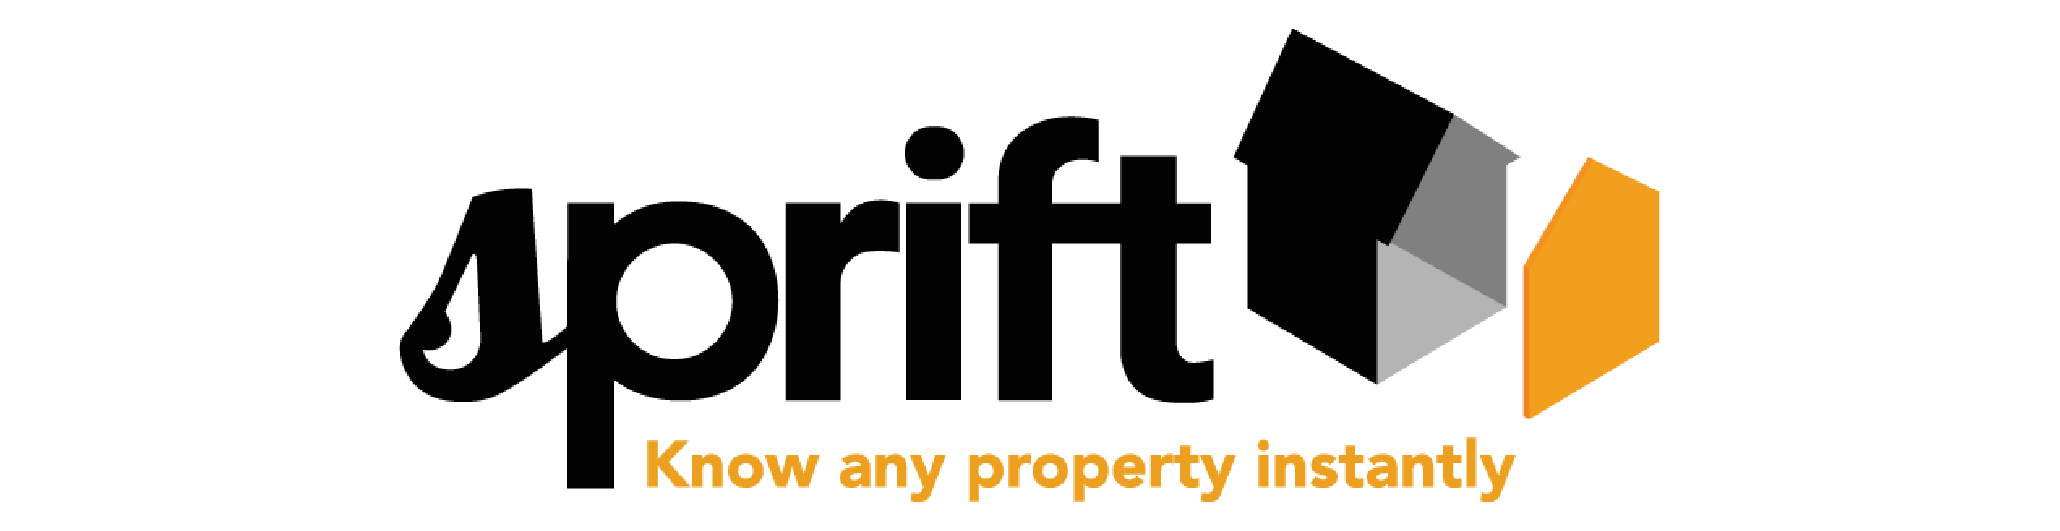 Sprift-1